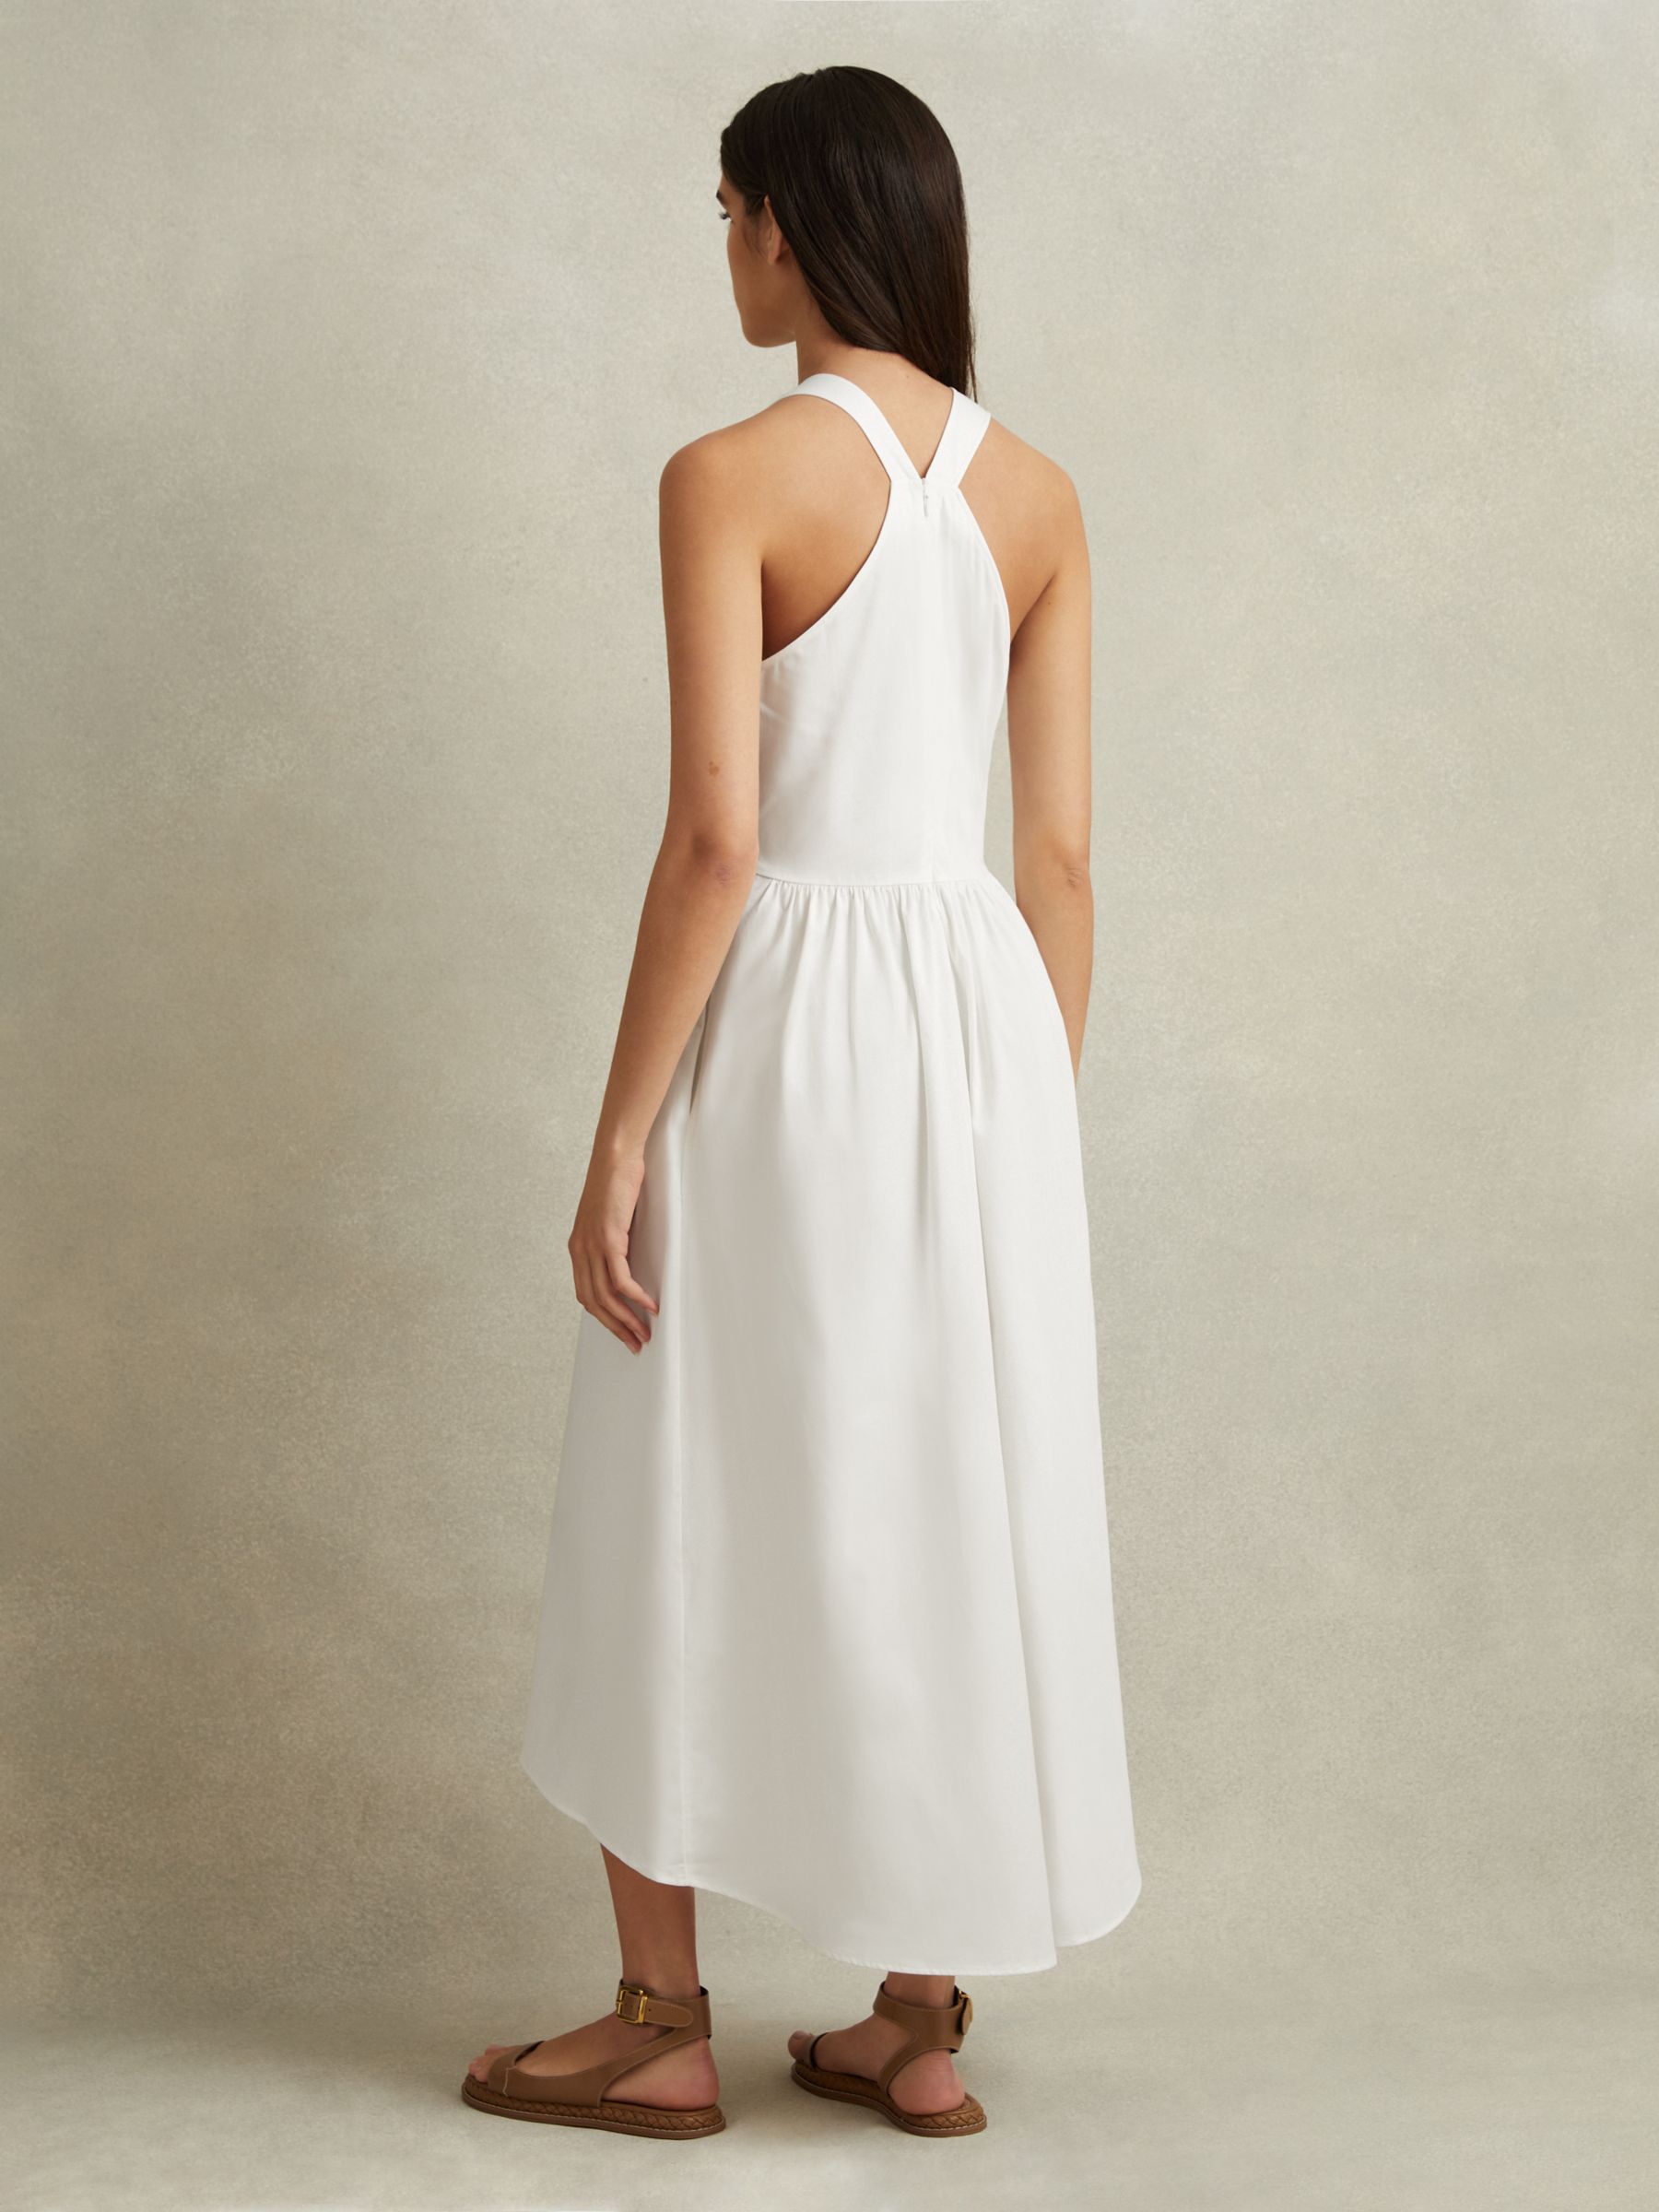 Reiss Yana Cotton Blend High-Low Hem Midi Dress, White, 6